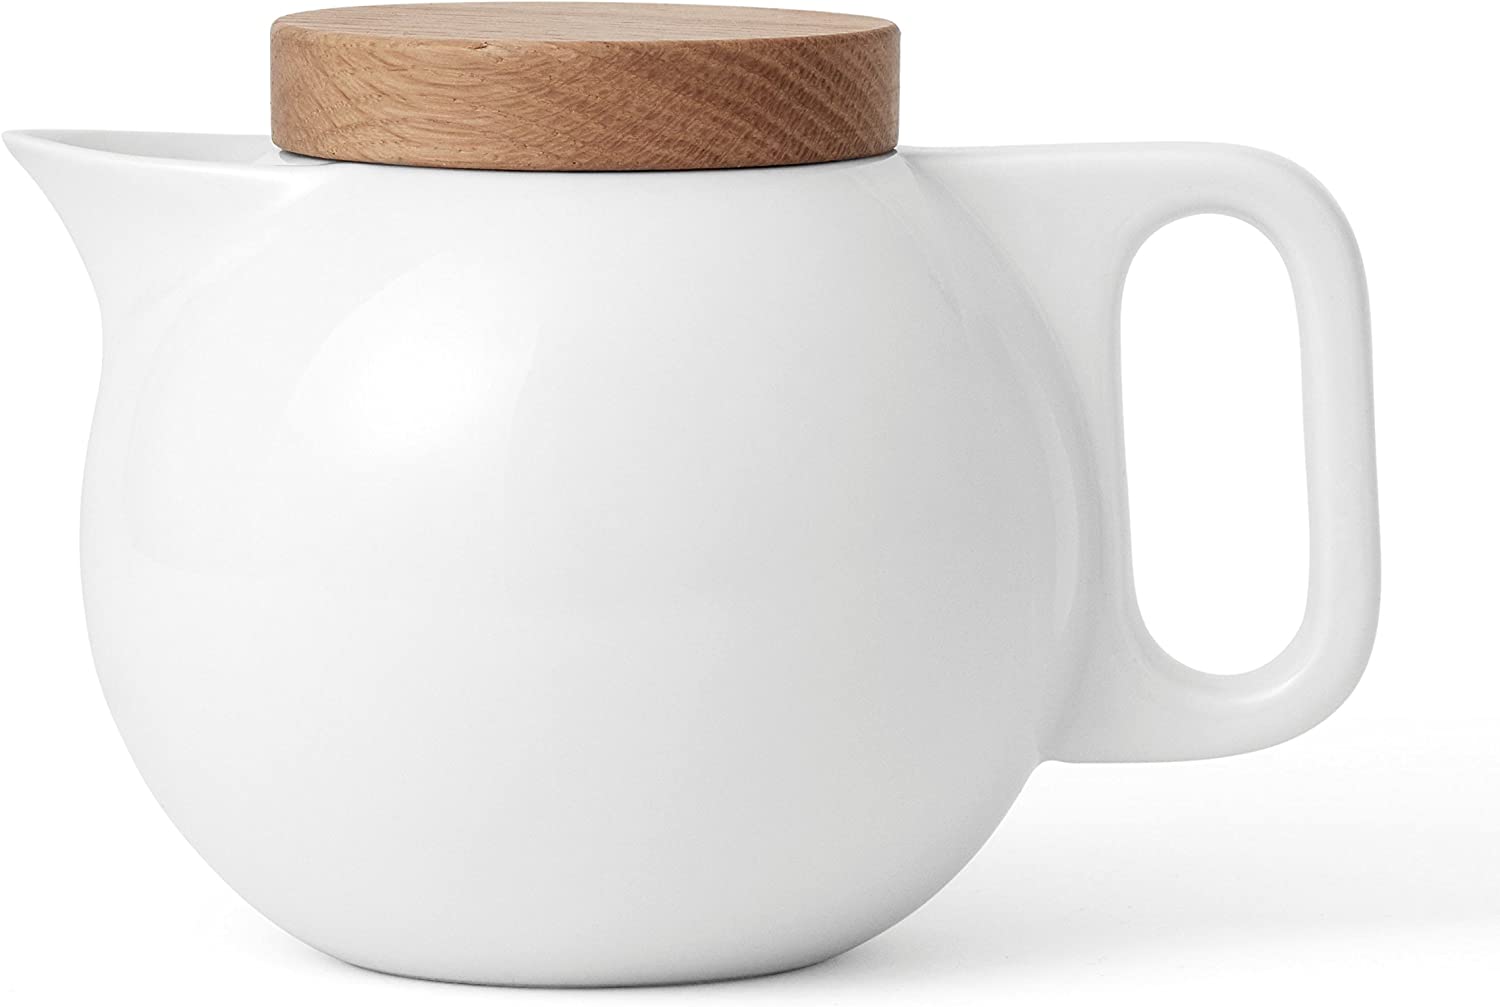 Viva Scandinavia 9102240 Teapot White 65 ml, Porcelain, White, 13.5 X 14 X 12.5 cm